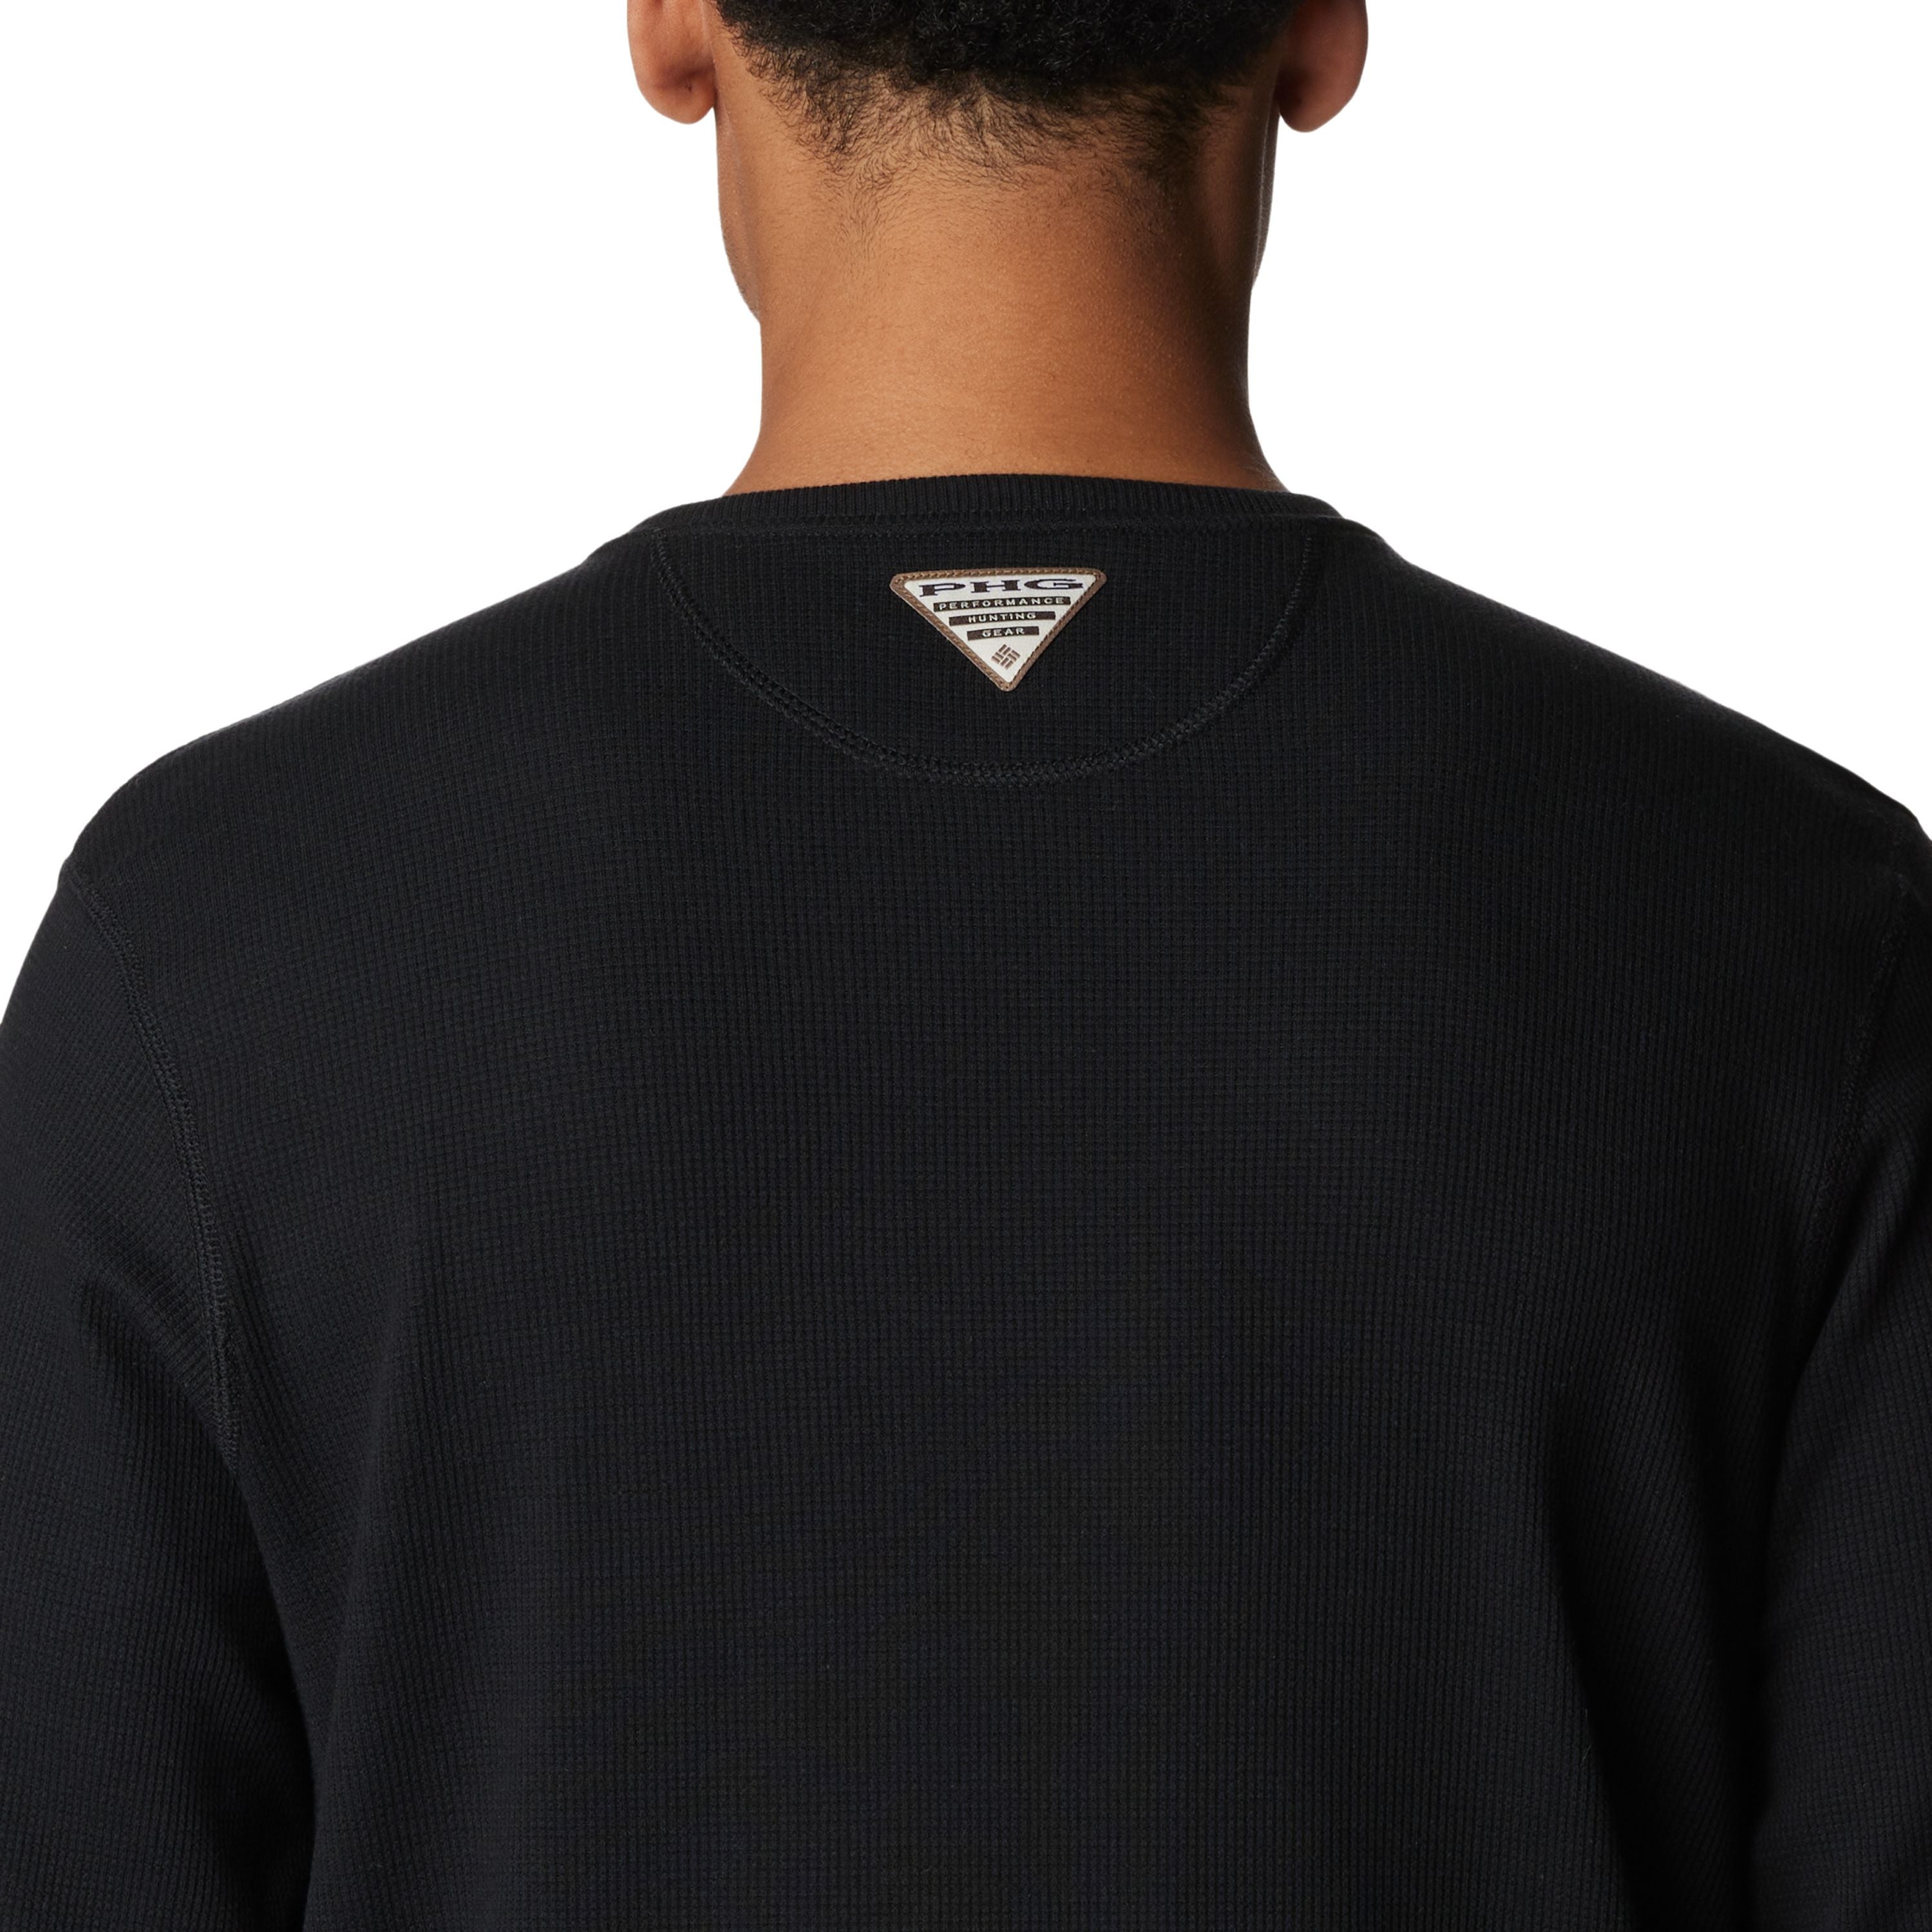 Chandail manches longues "PHG™ Built For It" - Homme||"PHG™ Built For It" Long sleeves shirt - Men's